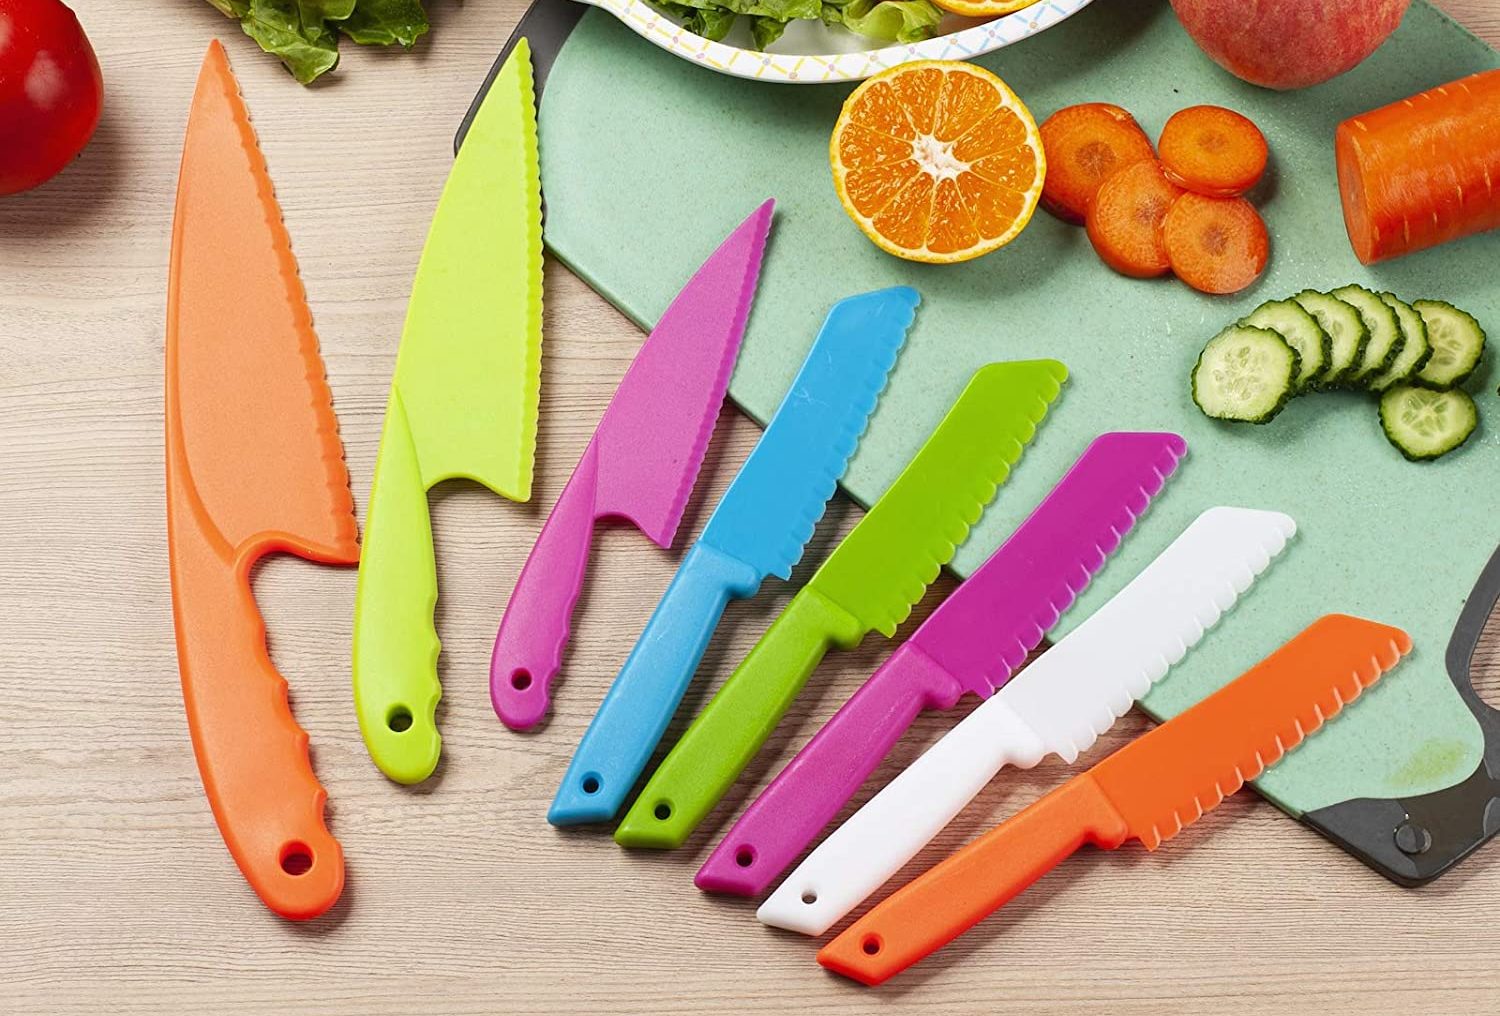 Plastic Kitchen Knife Penta Angel 3Pcs Nylon Safety cooking Baking